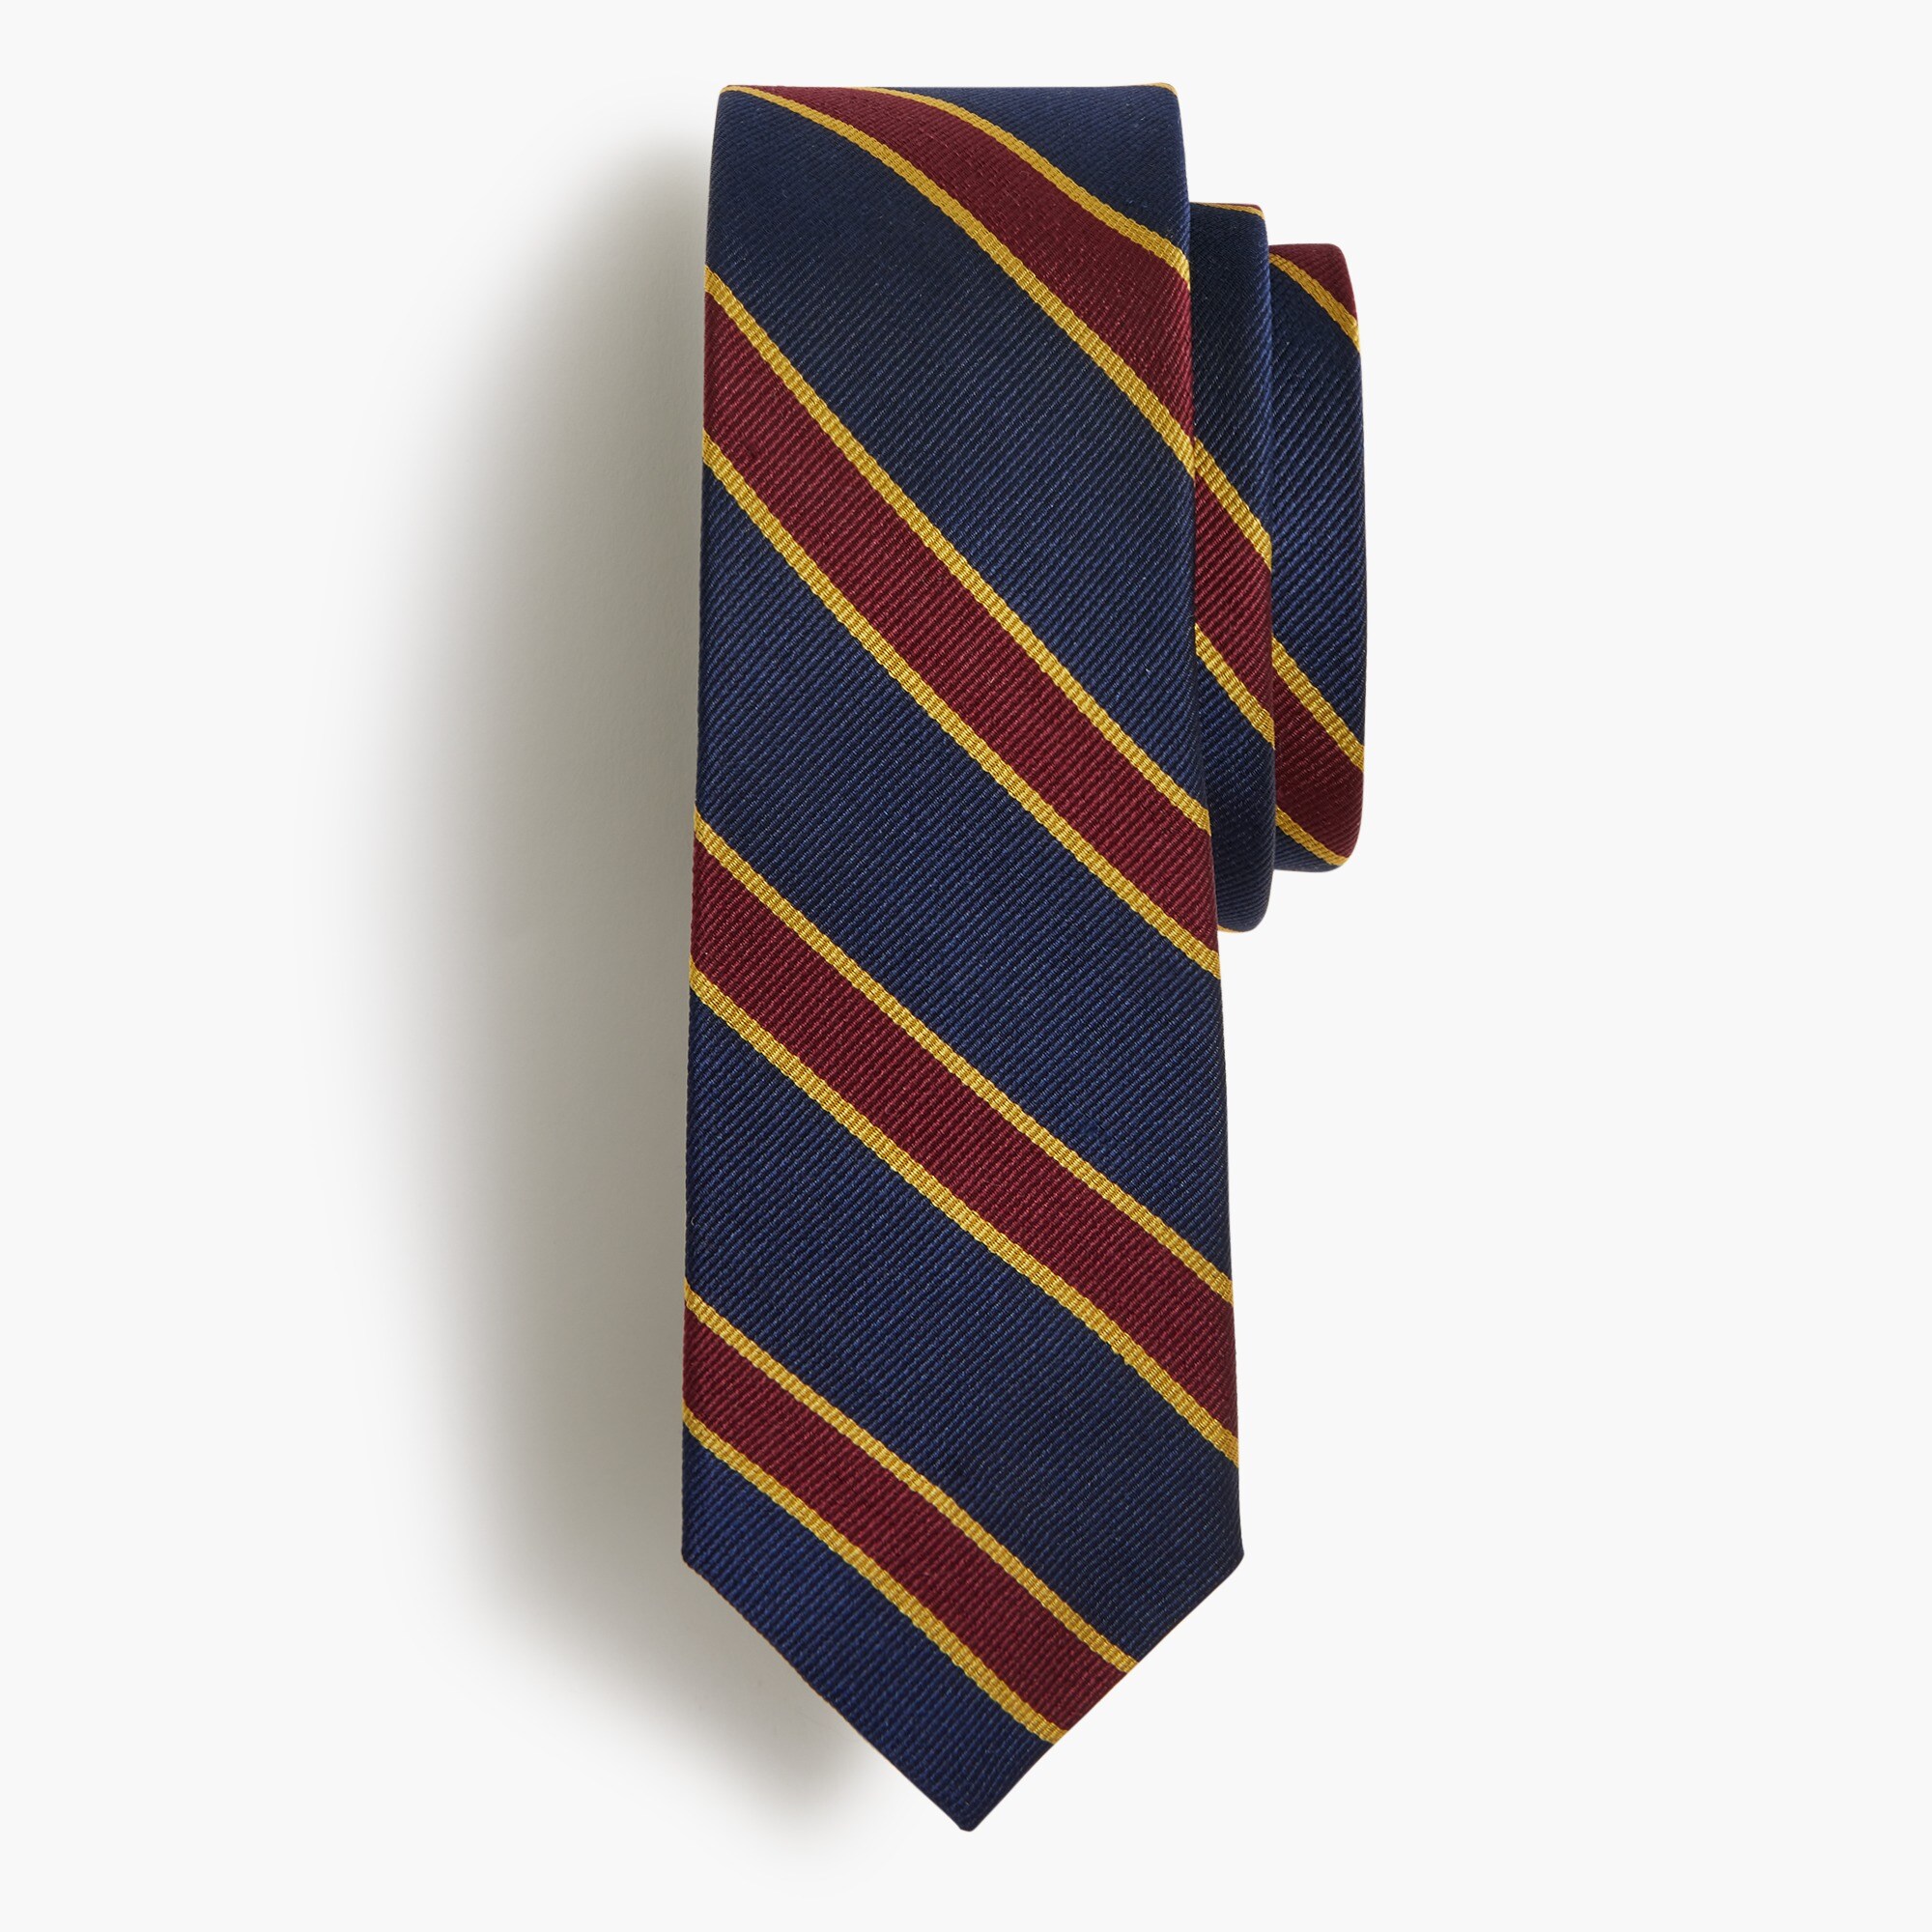  Striped tie